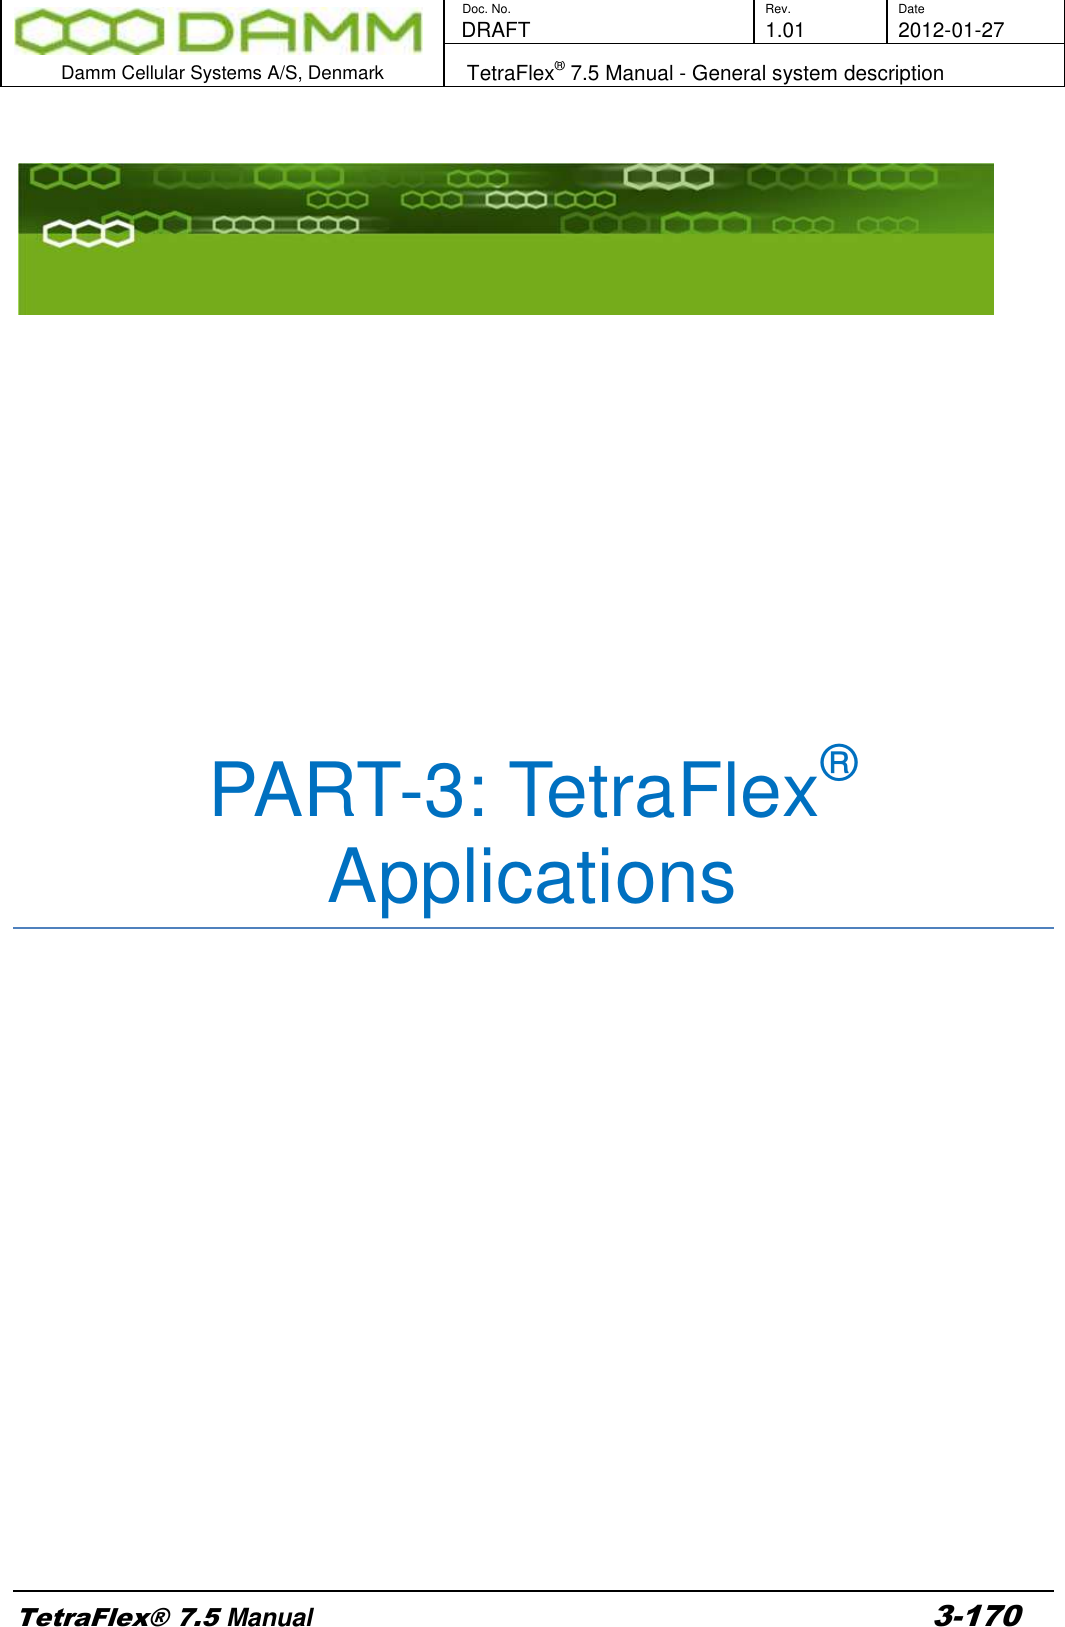        Doc. No. Rev. Date    DRAFT  1.01 2012-01-27  Damm Cellular Systems A/S, Denmark   TetraFlex® 7.5 Manual - General system description  TetraFlex® 7.5 Manual 3-170                   PART-3: TetraFlex® Applications                      